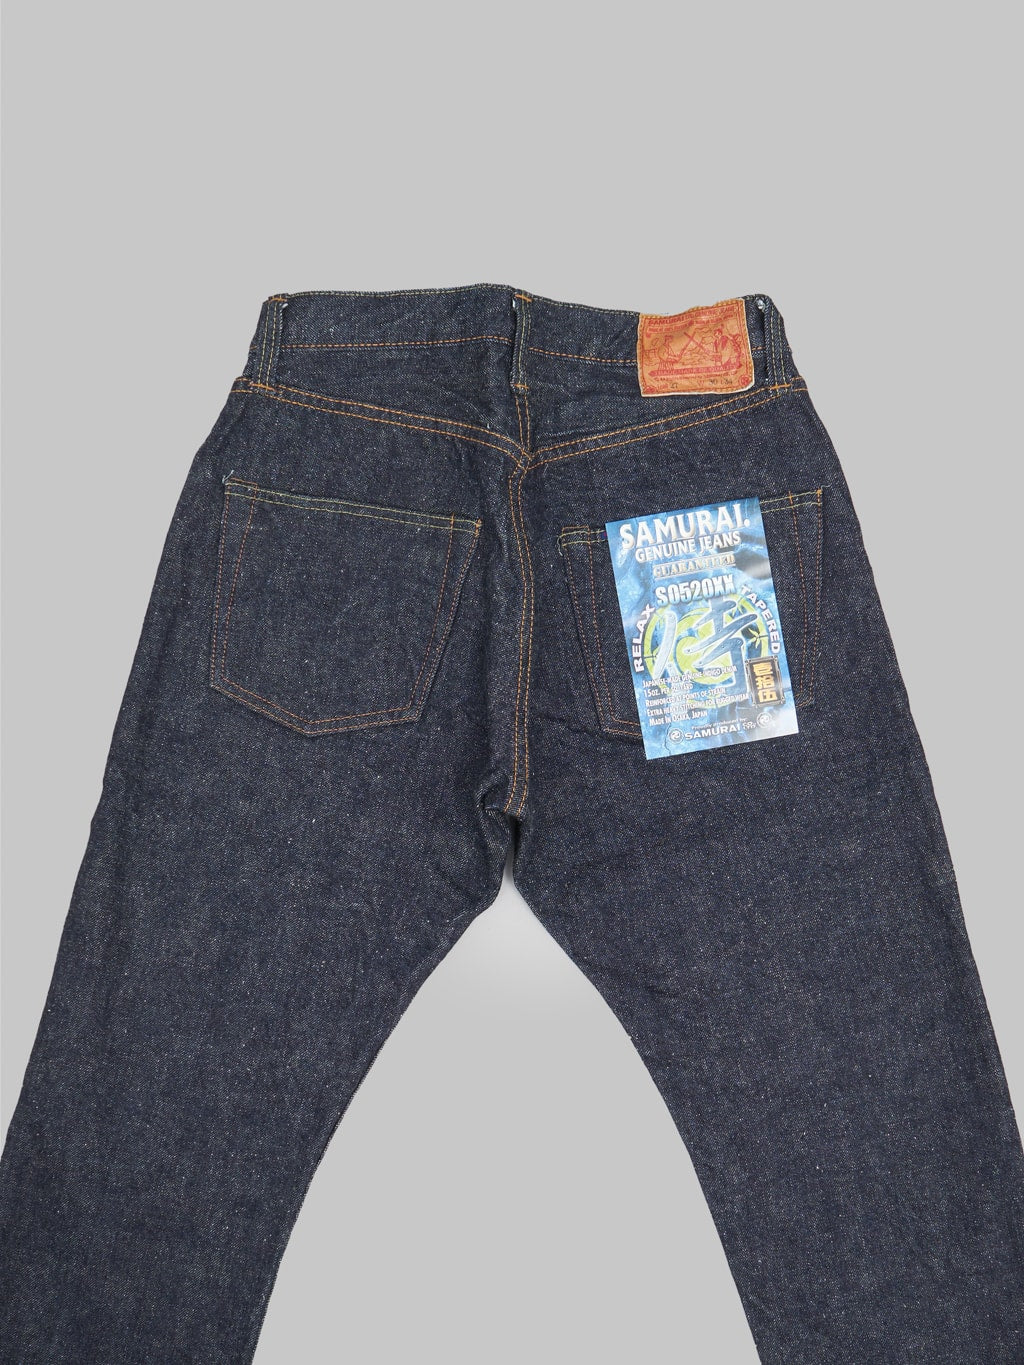 samurai jeans s0520xx otokogi 15oz relaxed tapered jeans pockets